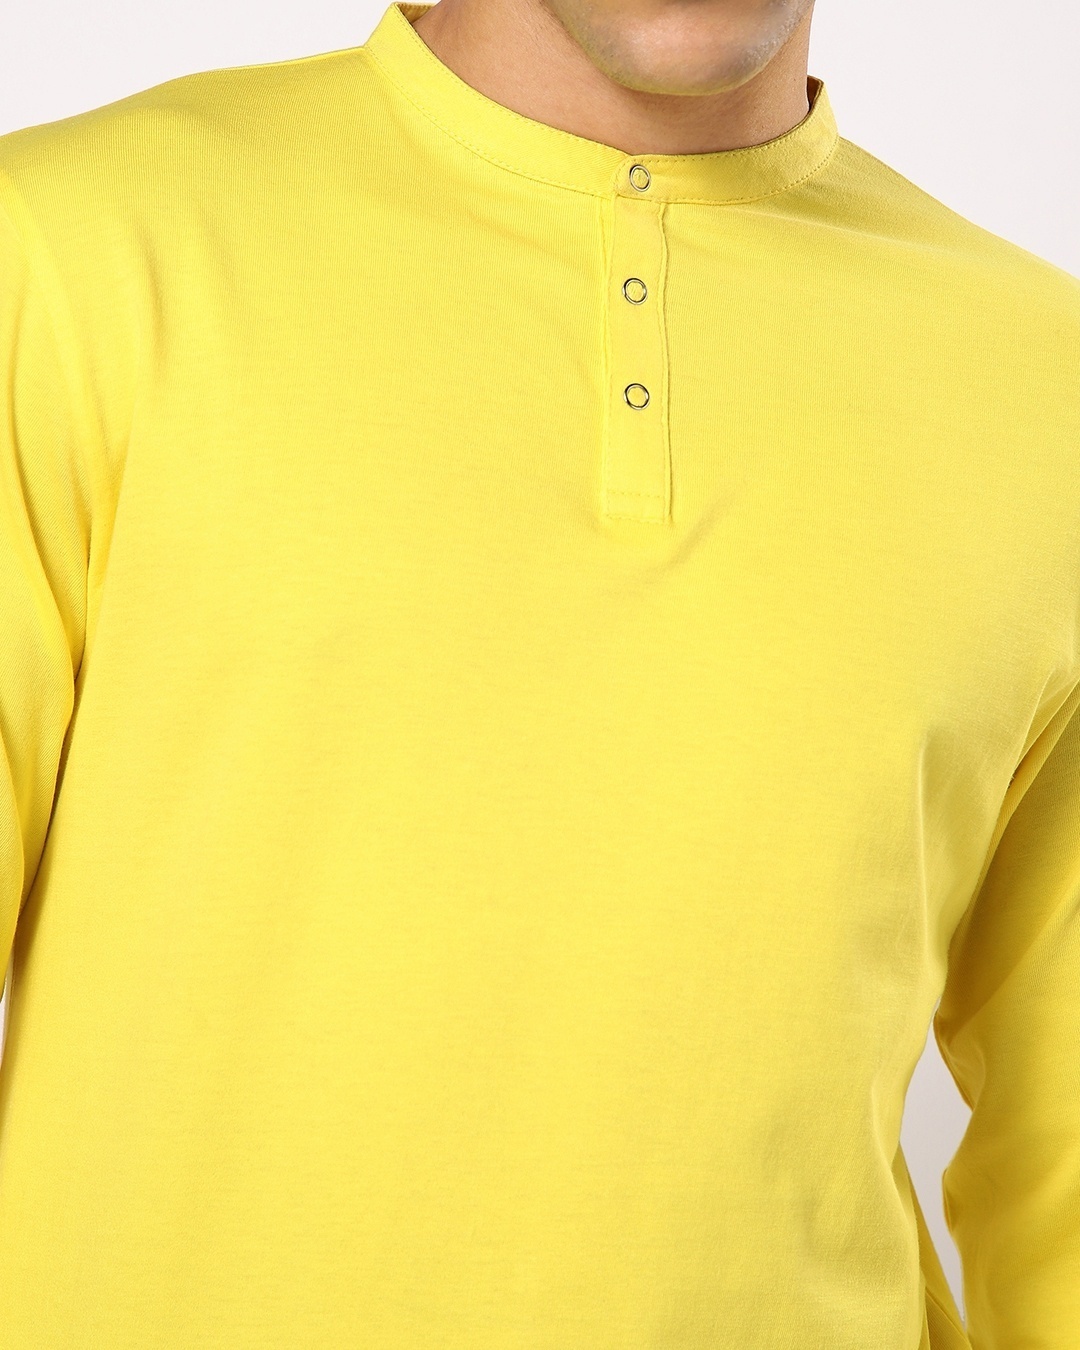 Shop Men's Birthday Yellow Henley T-shirt